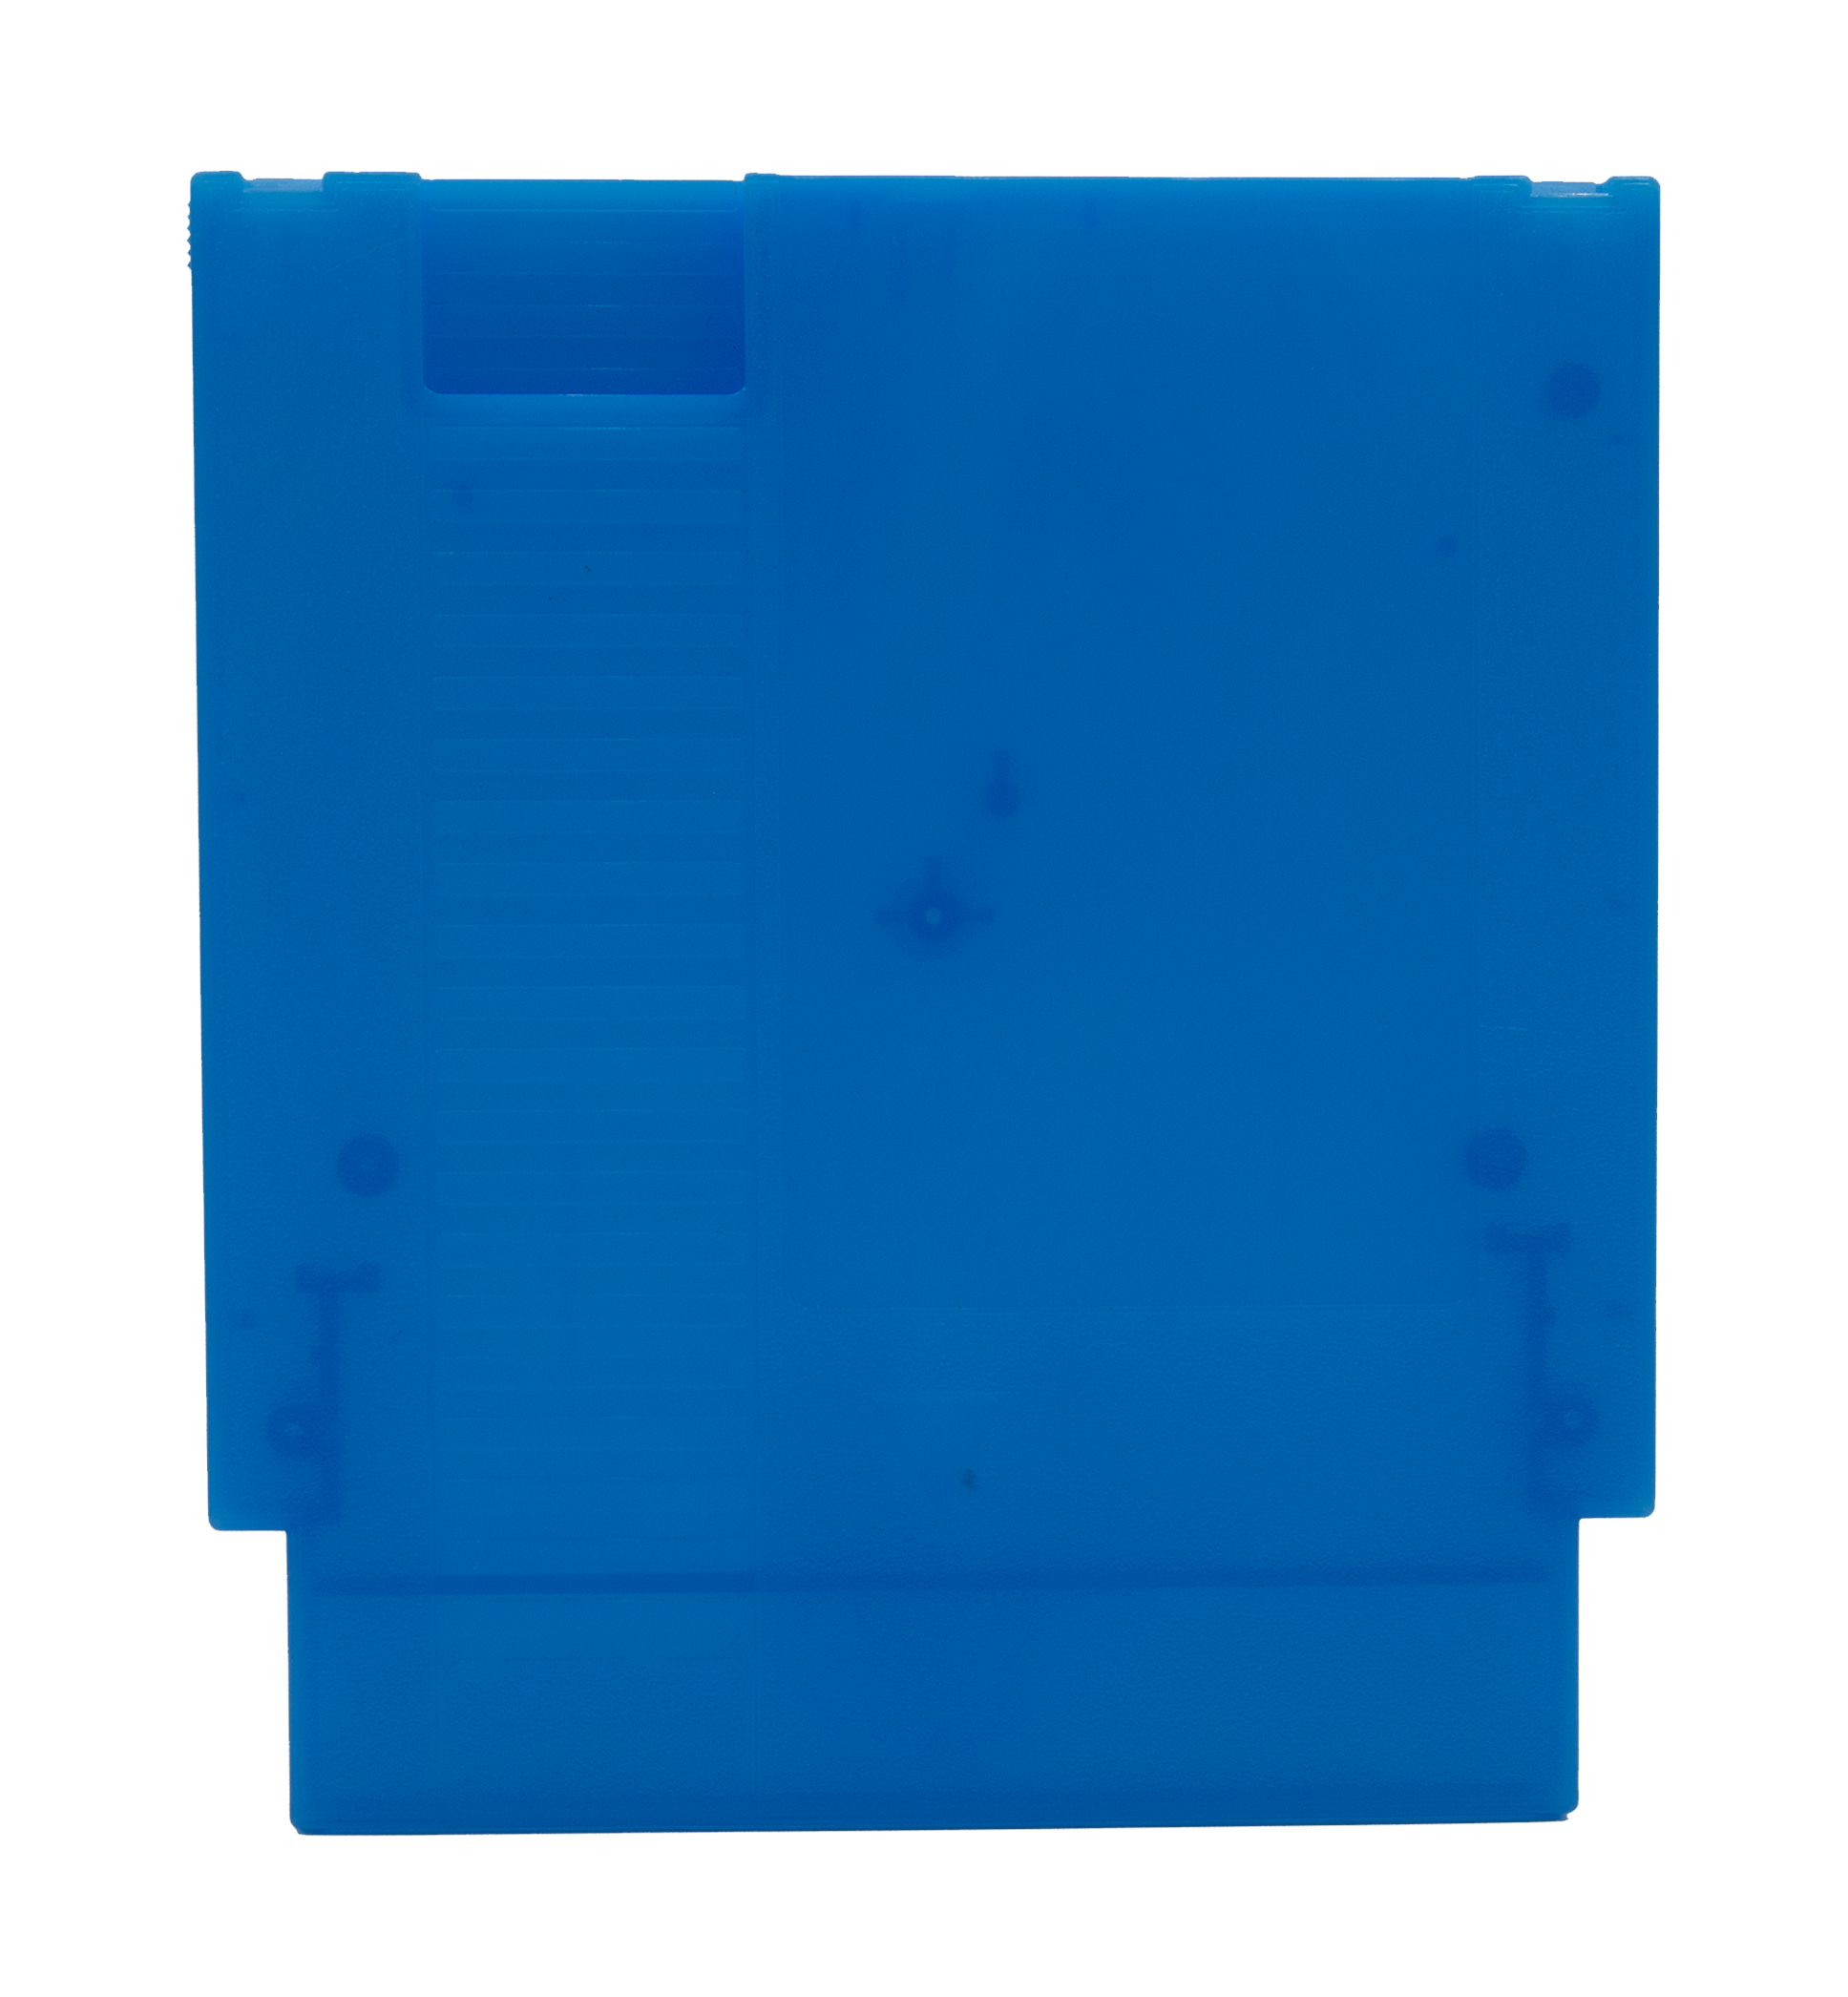 Cerulean Blue NES (Nintendo Entertainment System) Replacement Cartridge Shell